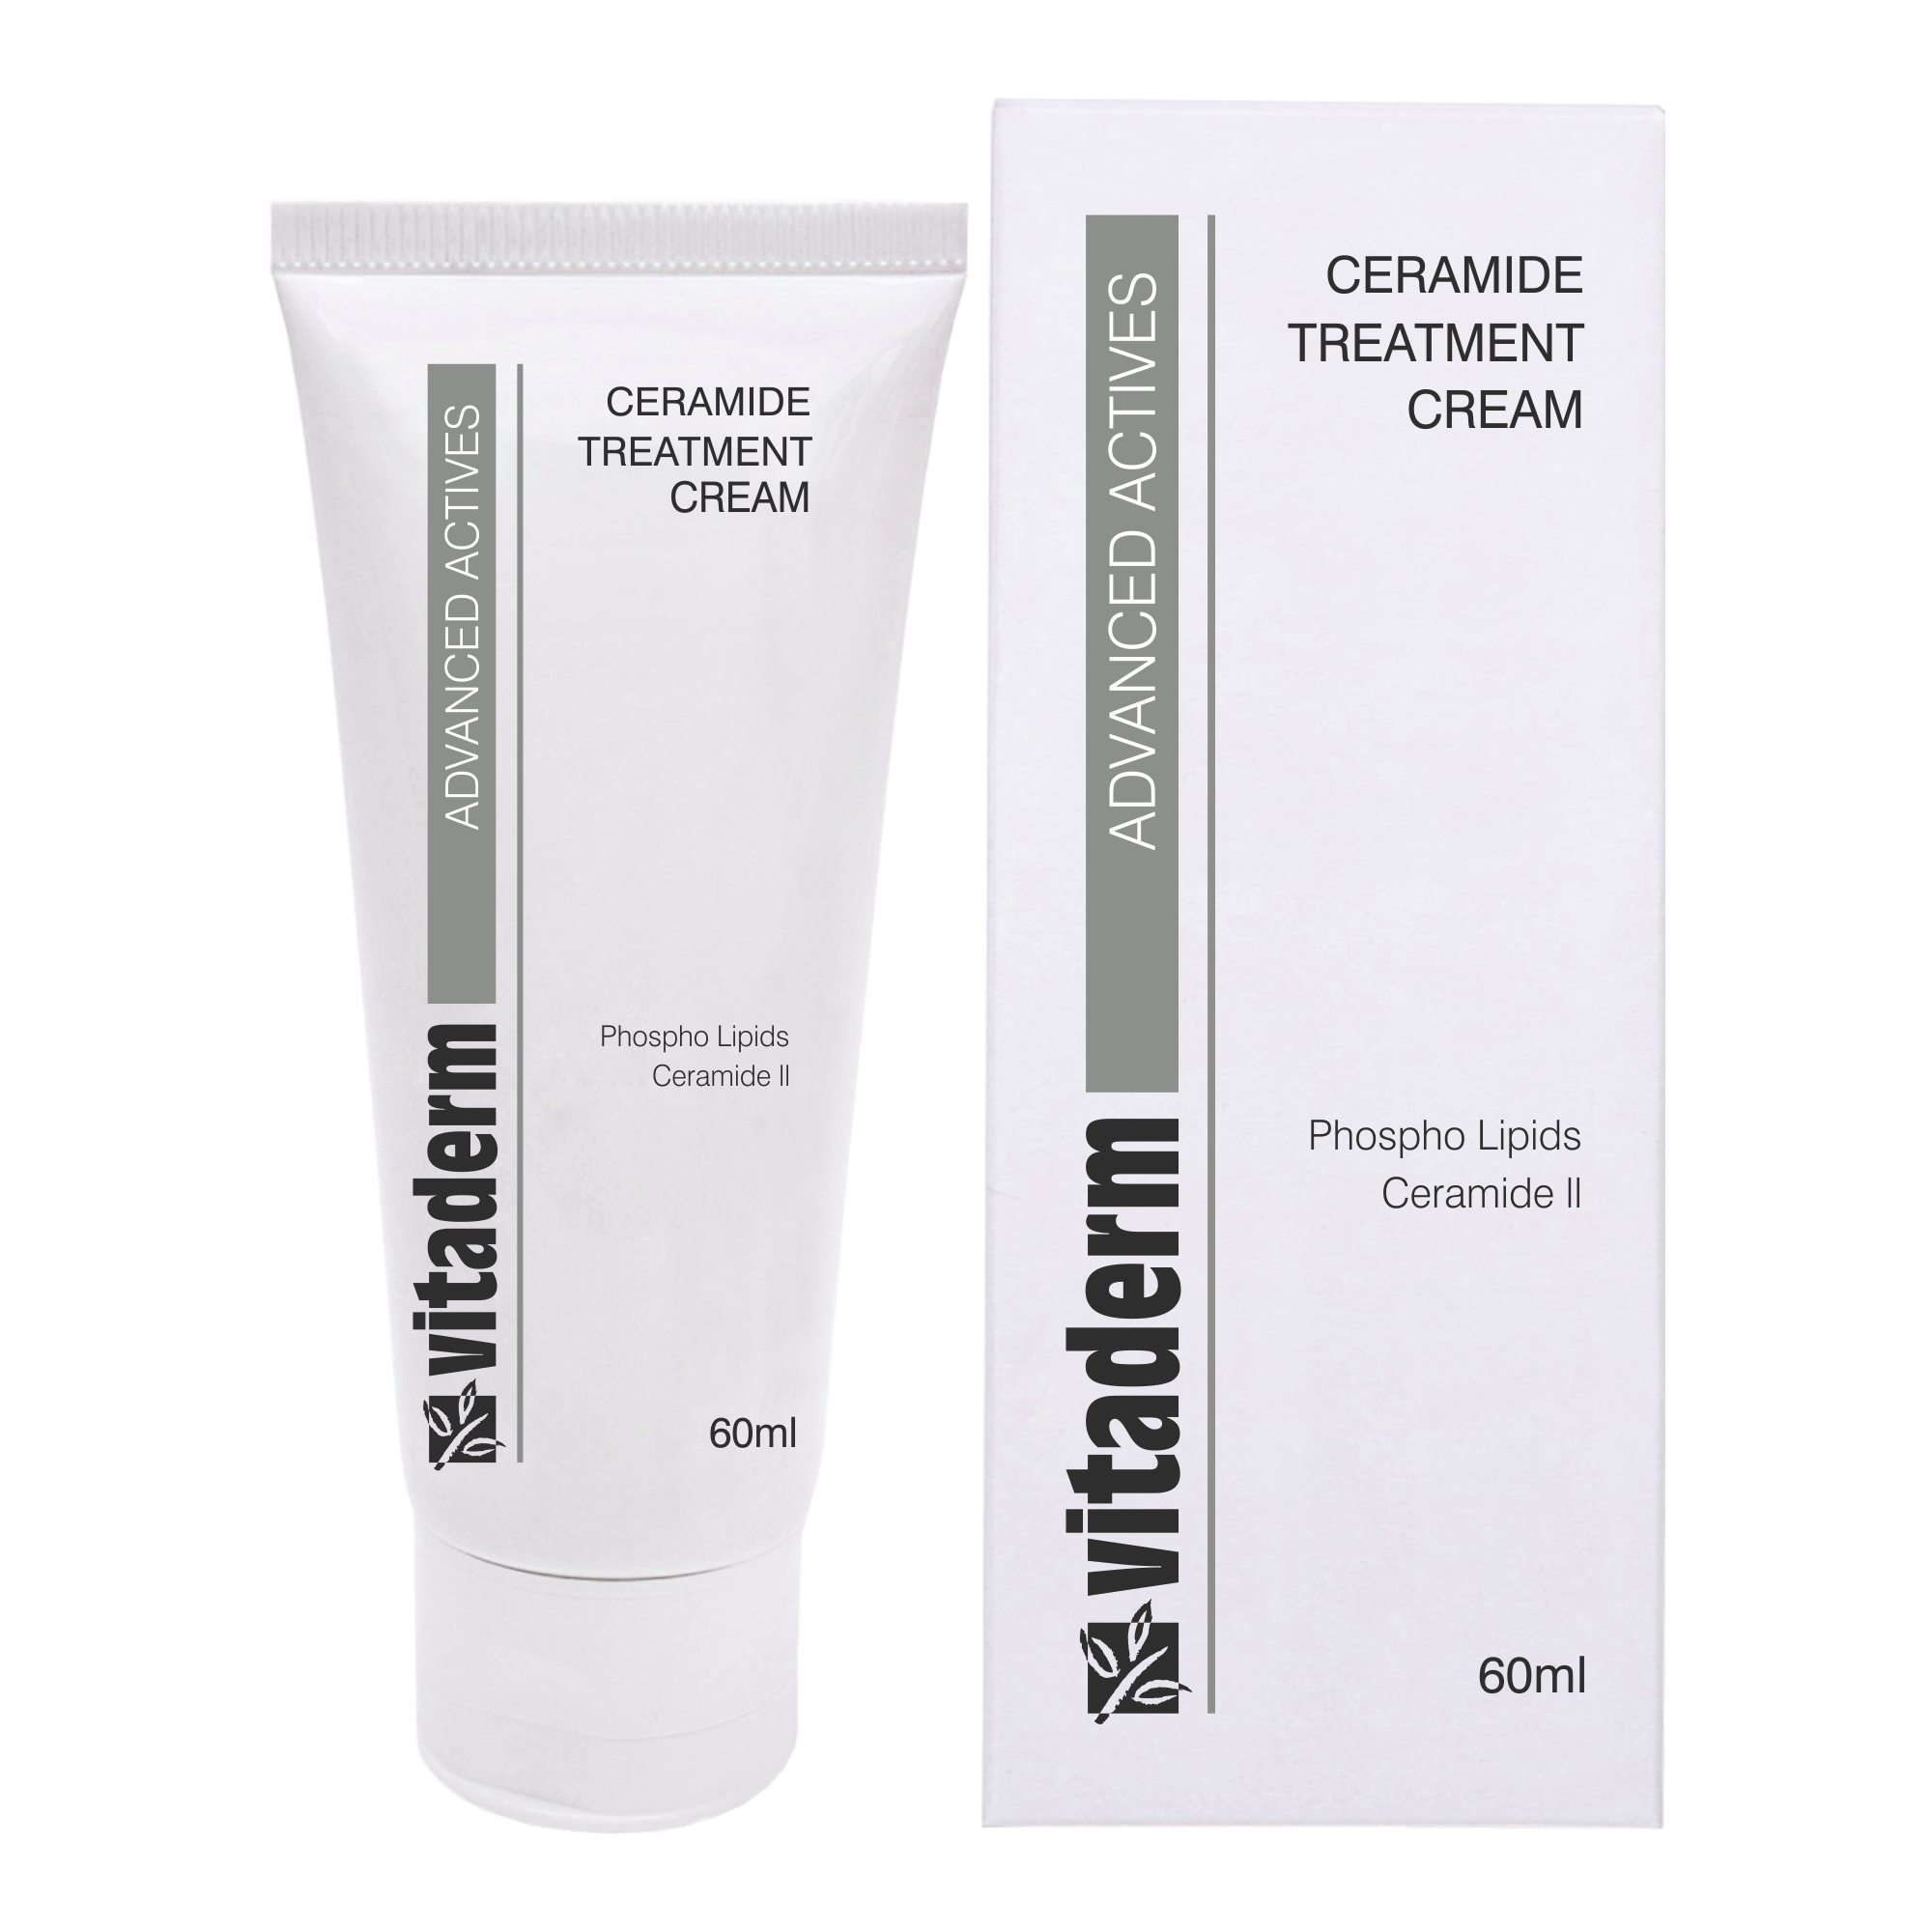 treatment-creams-ceramide